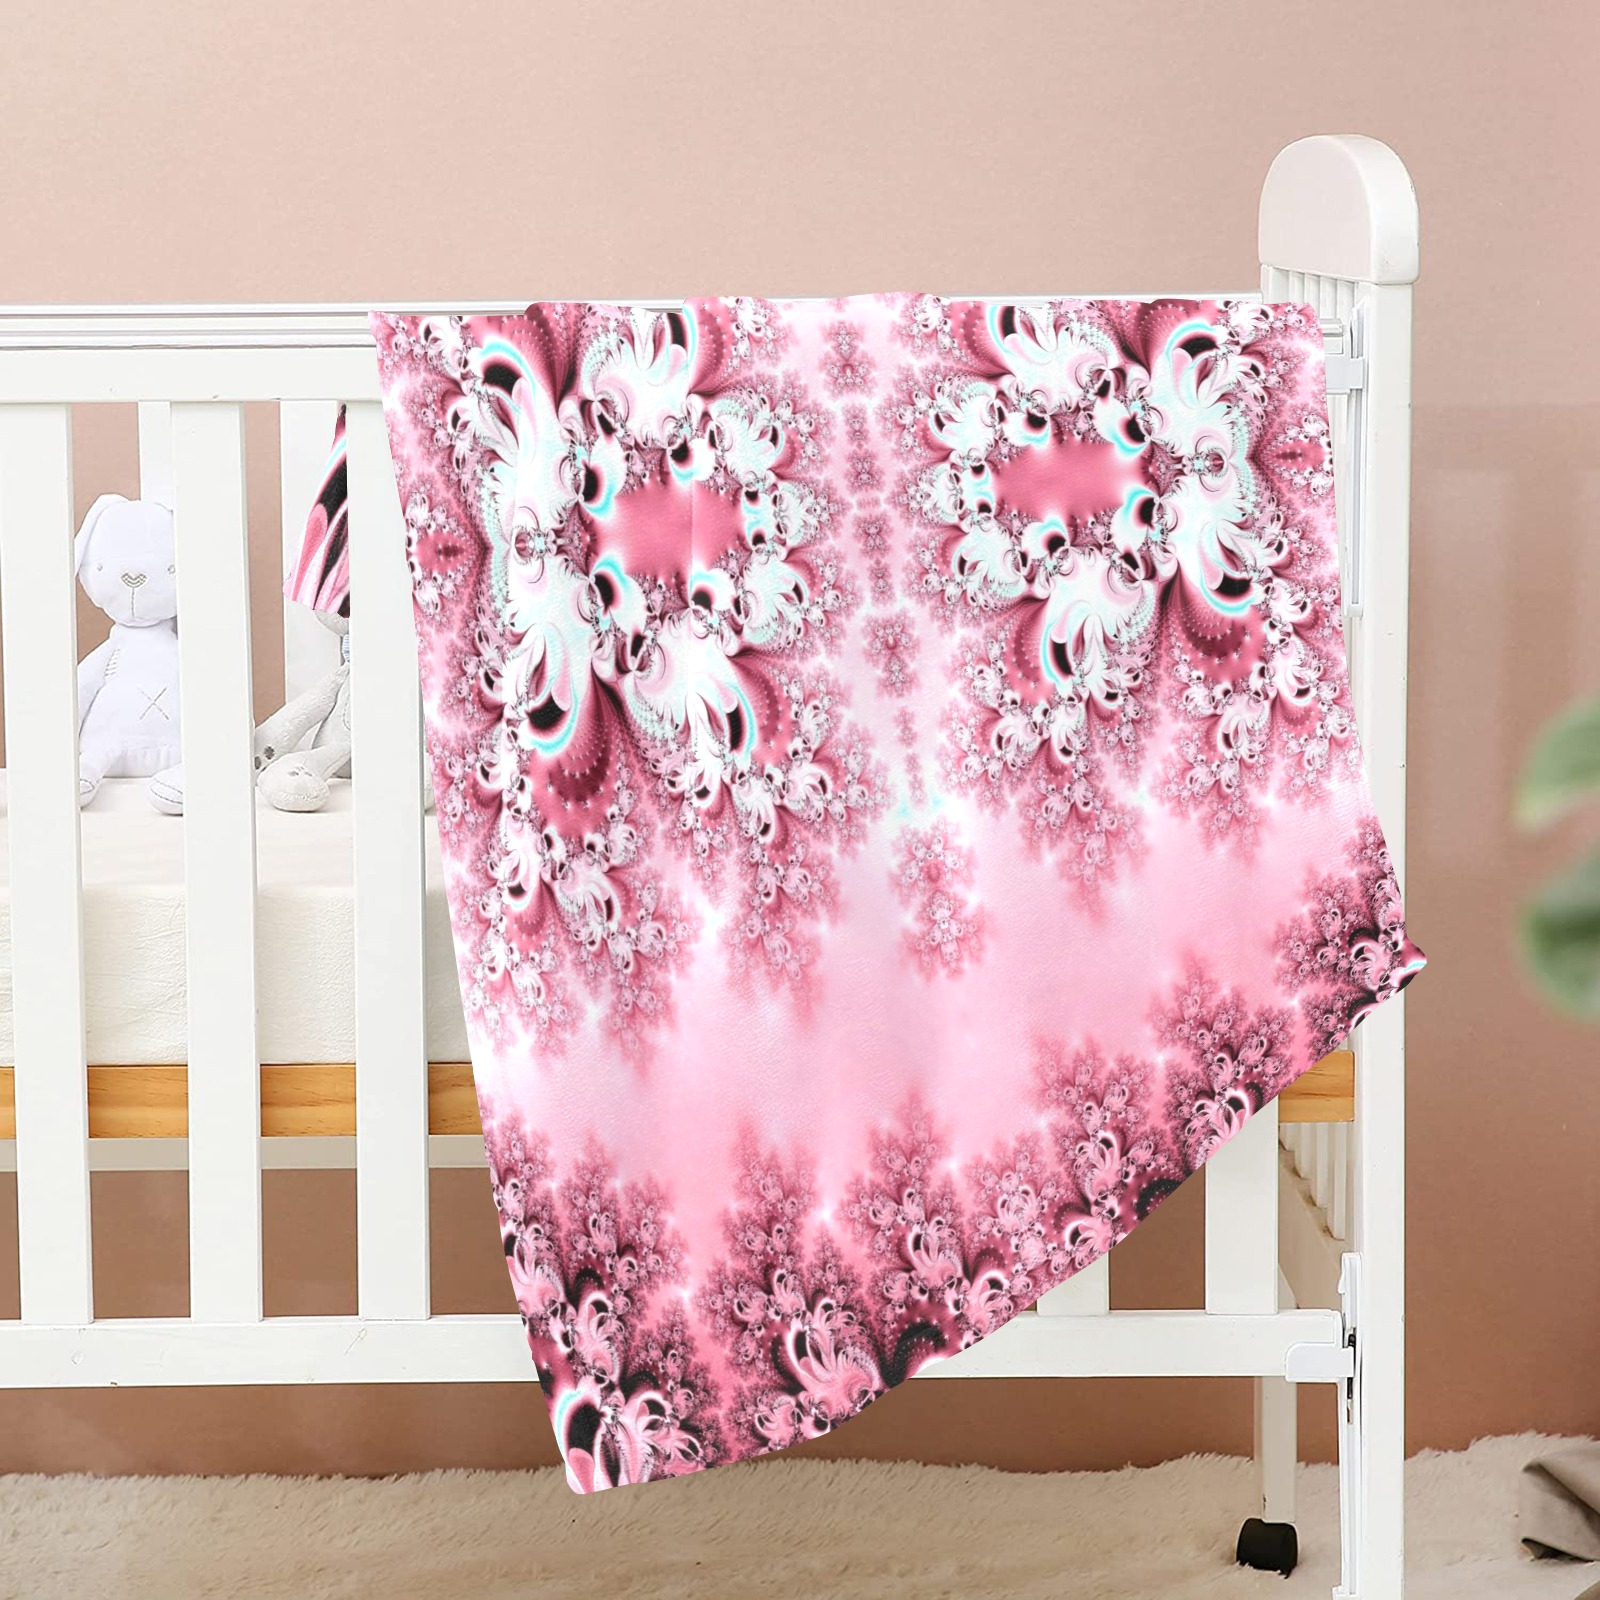 Pink Rose Garden Frost Fractal Baby Blanket 40"x50"